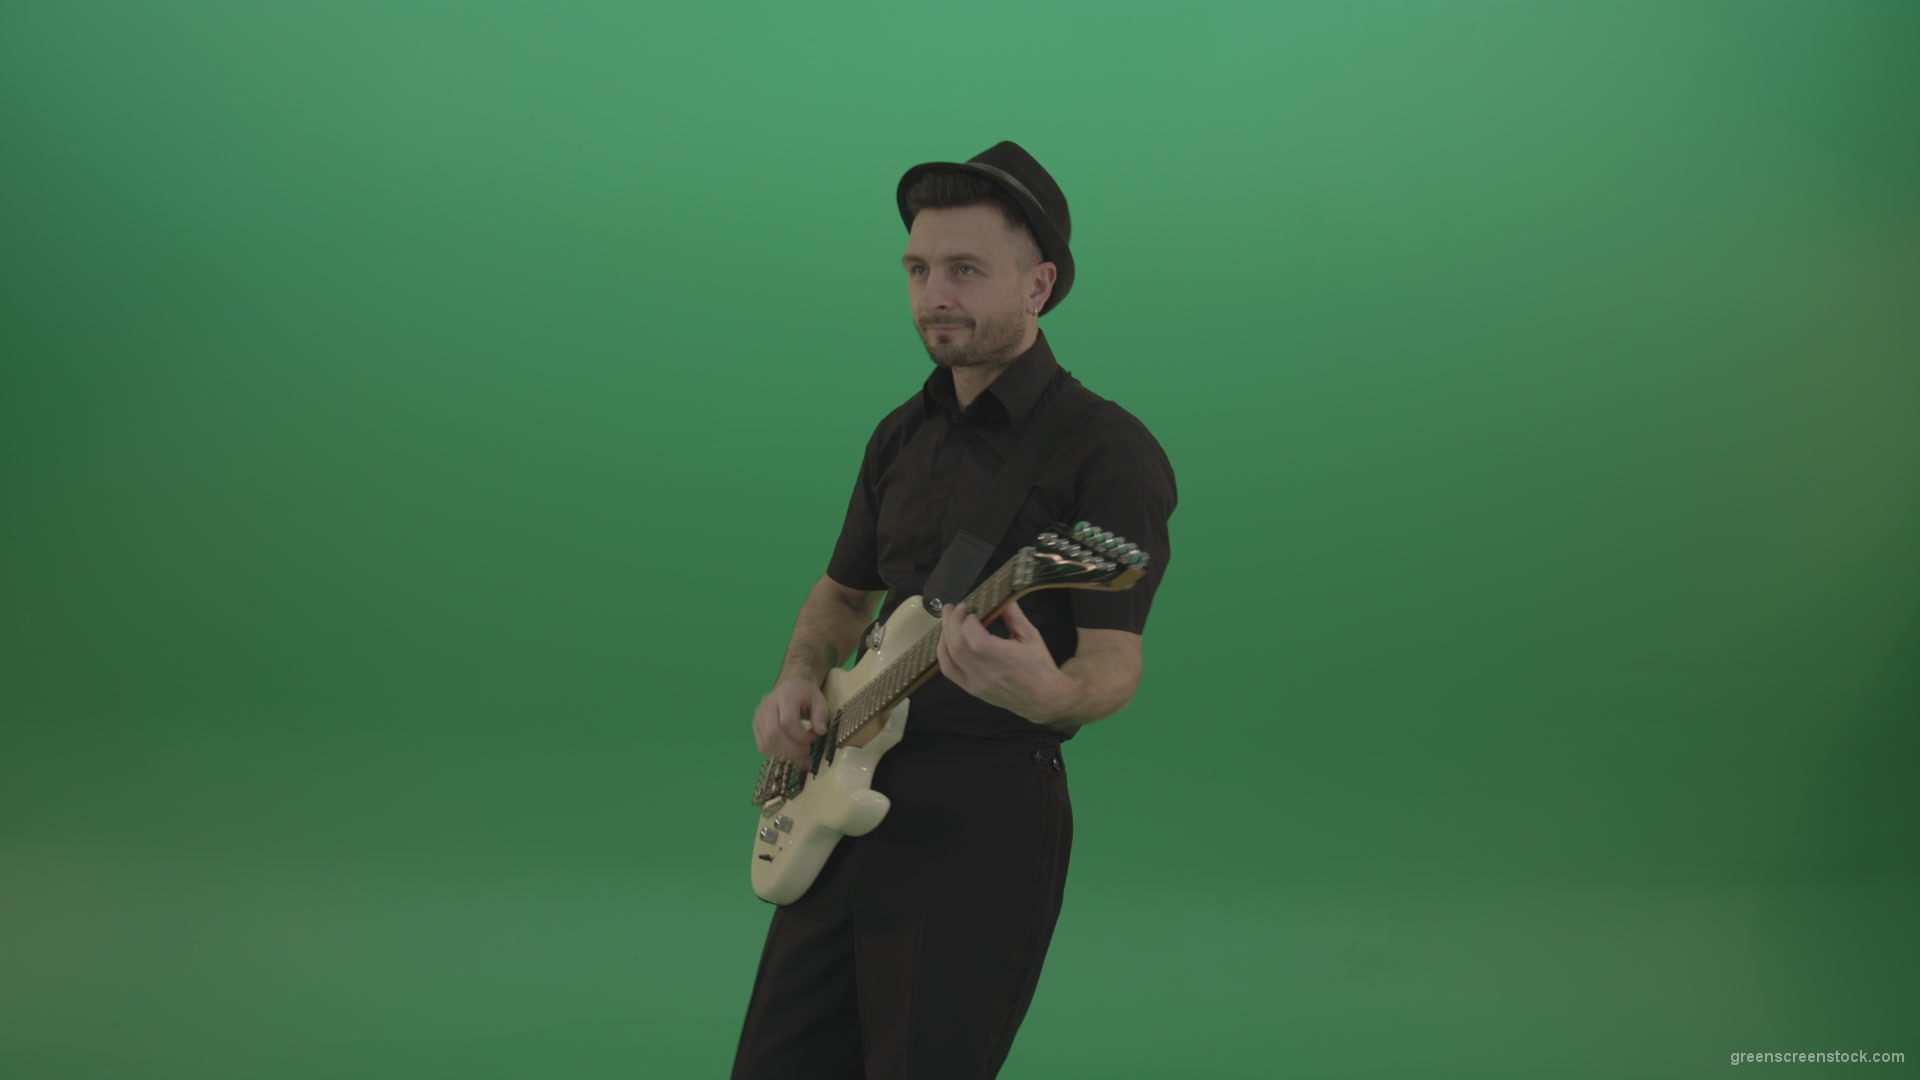 Man-in-black-playing-white-guitar-on-green-screen-1_008 Green Screen Stock